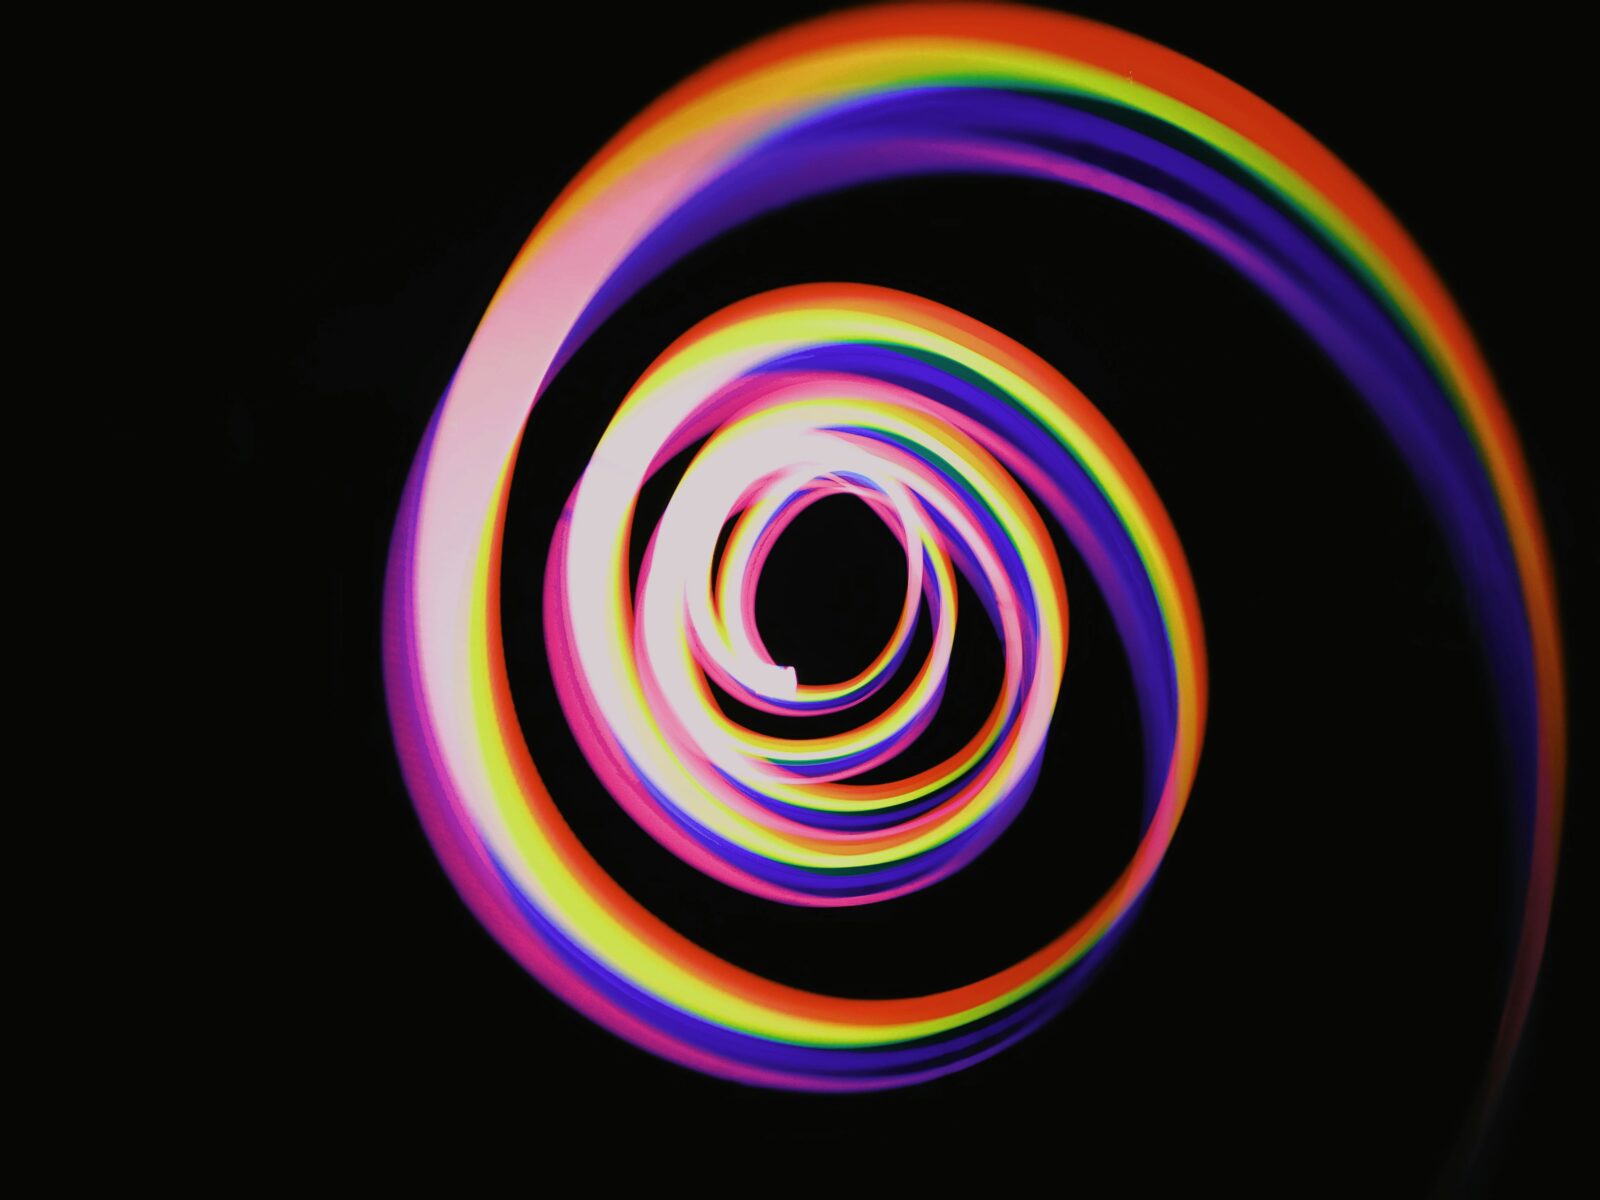 rainbow spiral on a black background